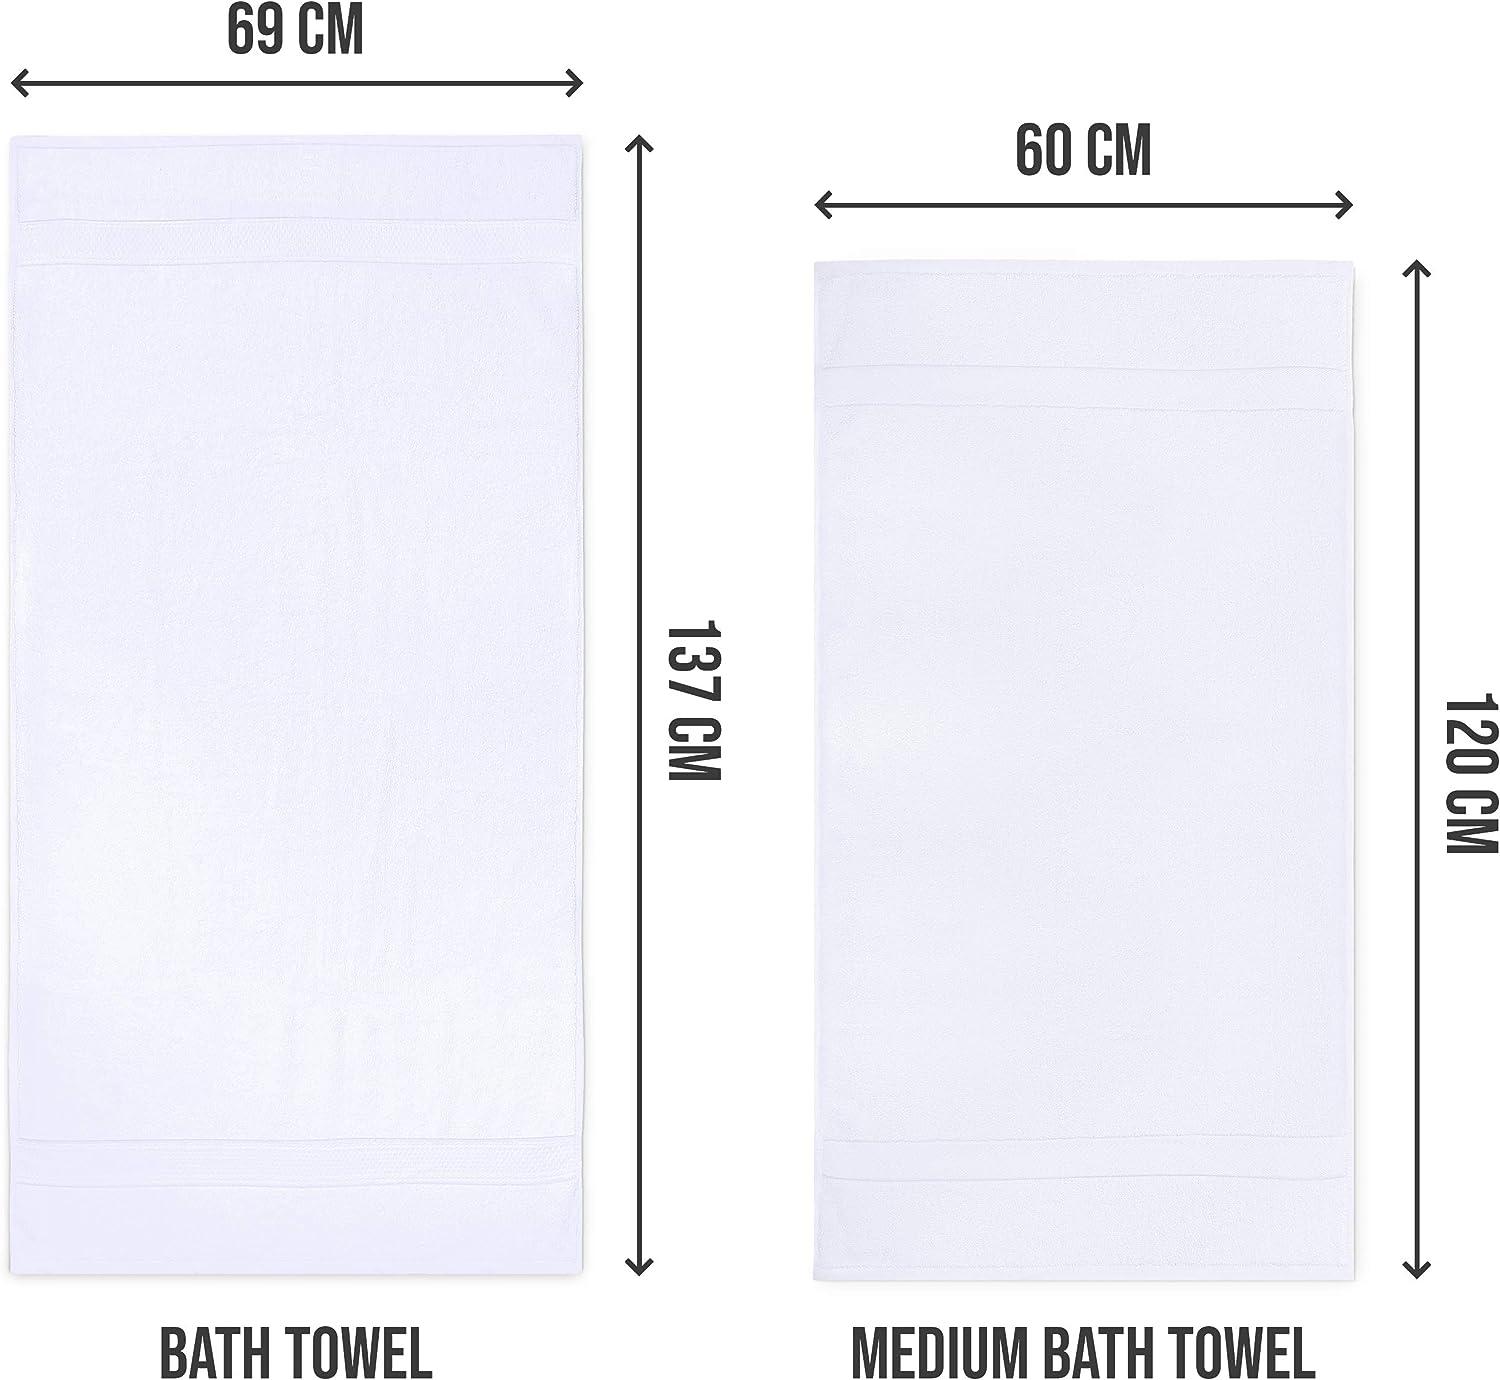 Utopia Towels 6 Pack Bath Towel Set, 100% Ring Spun Cotton (24 x 48 Inches)  Medi